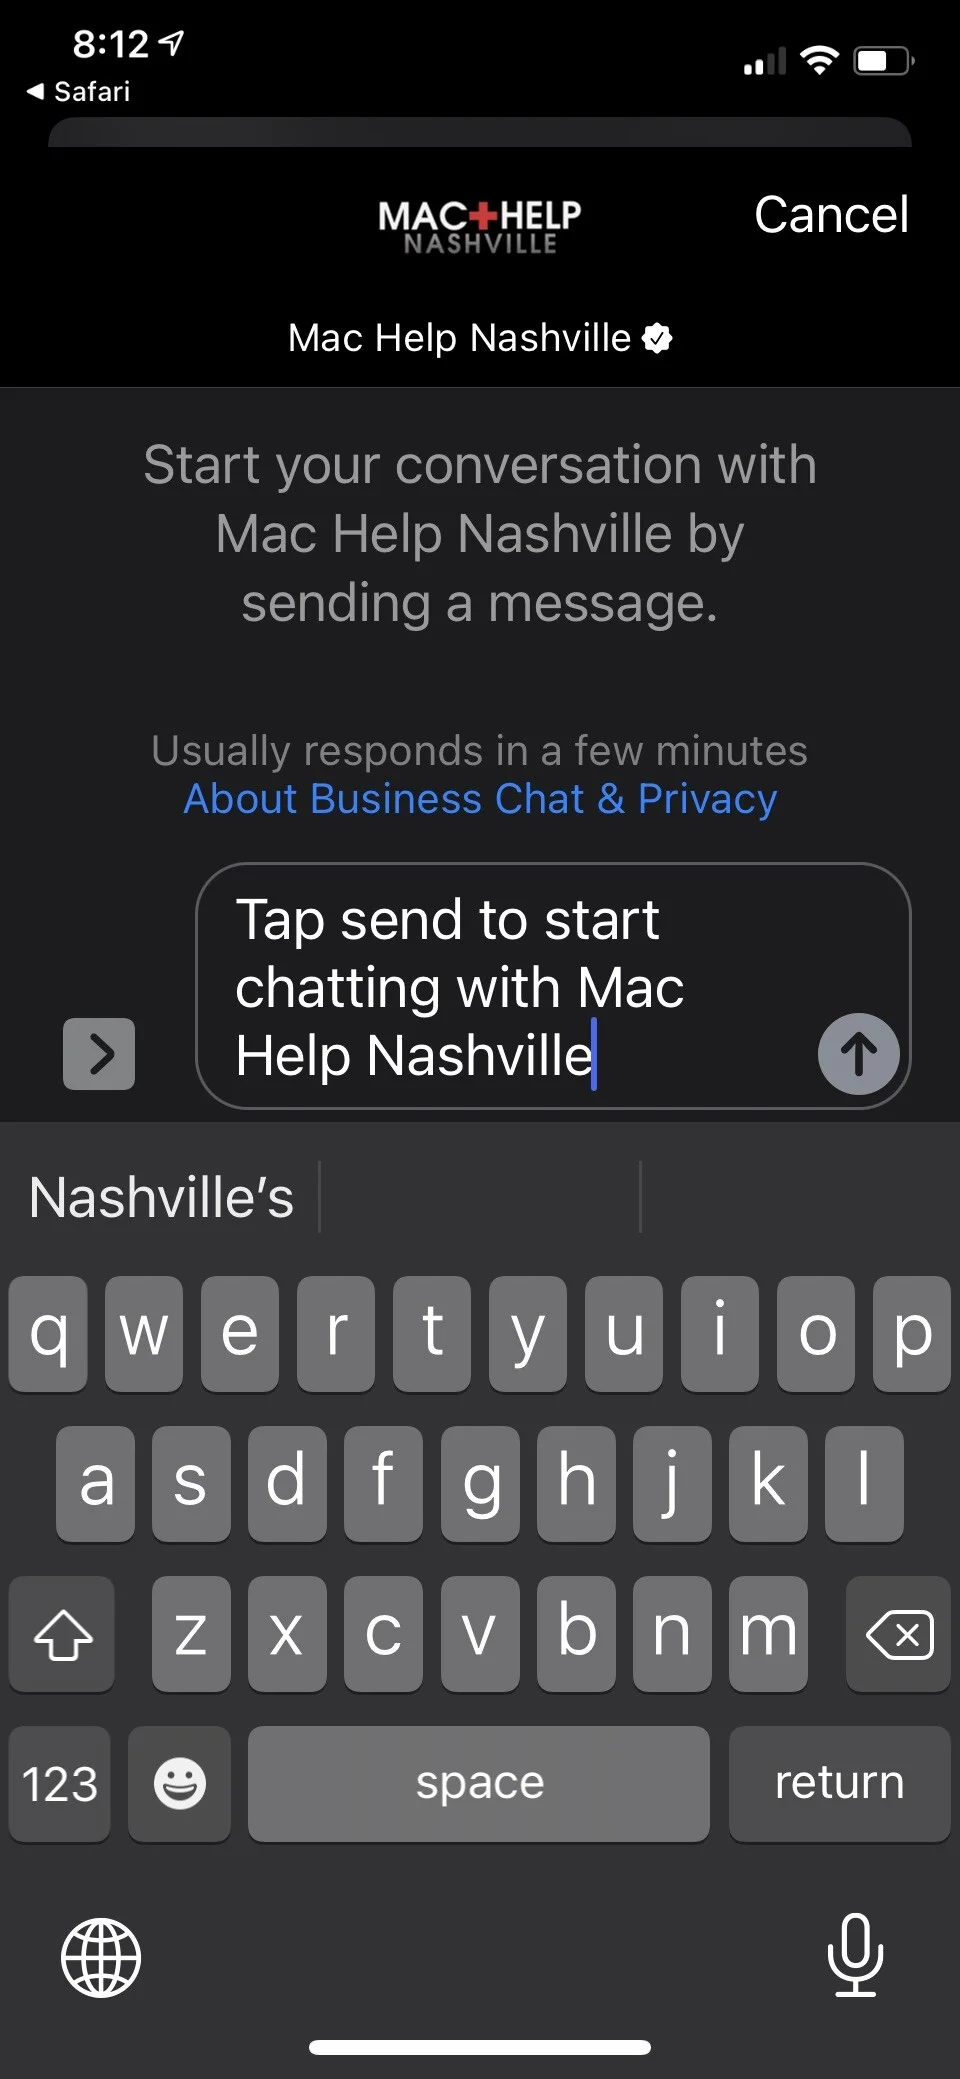 Contact Mac Help